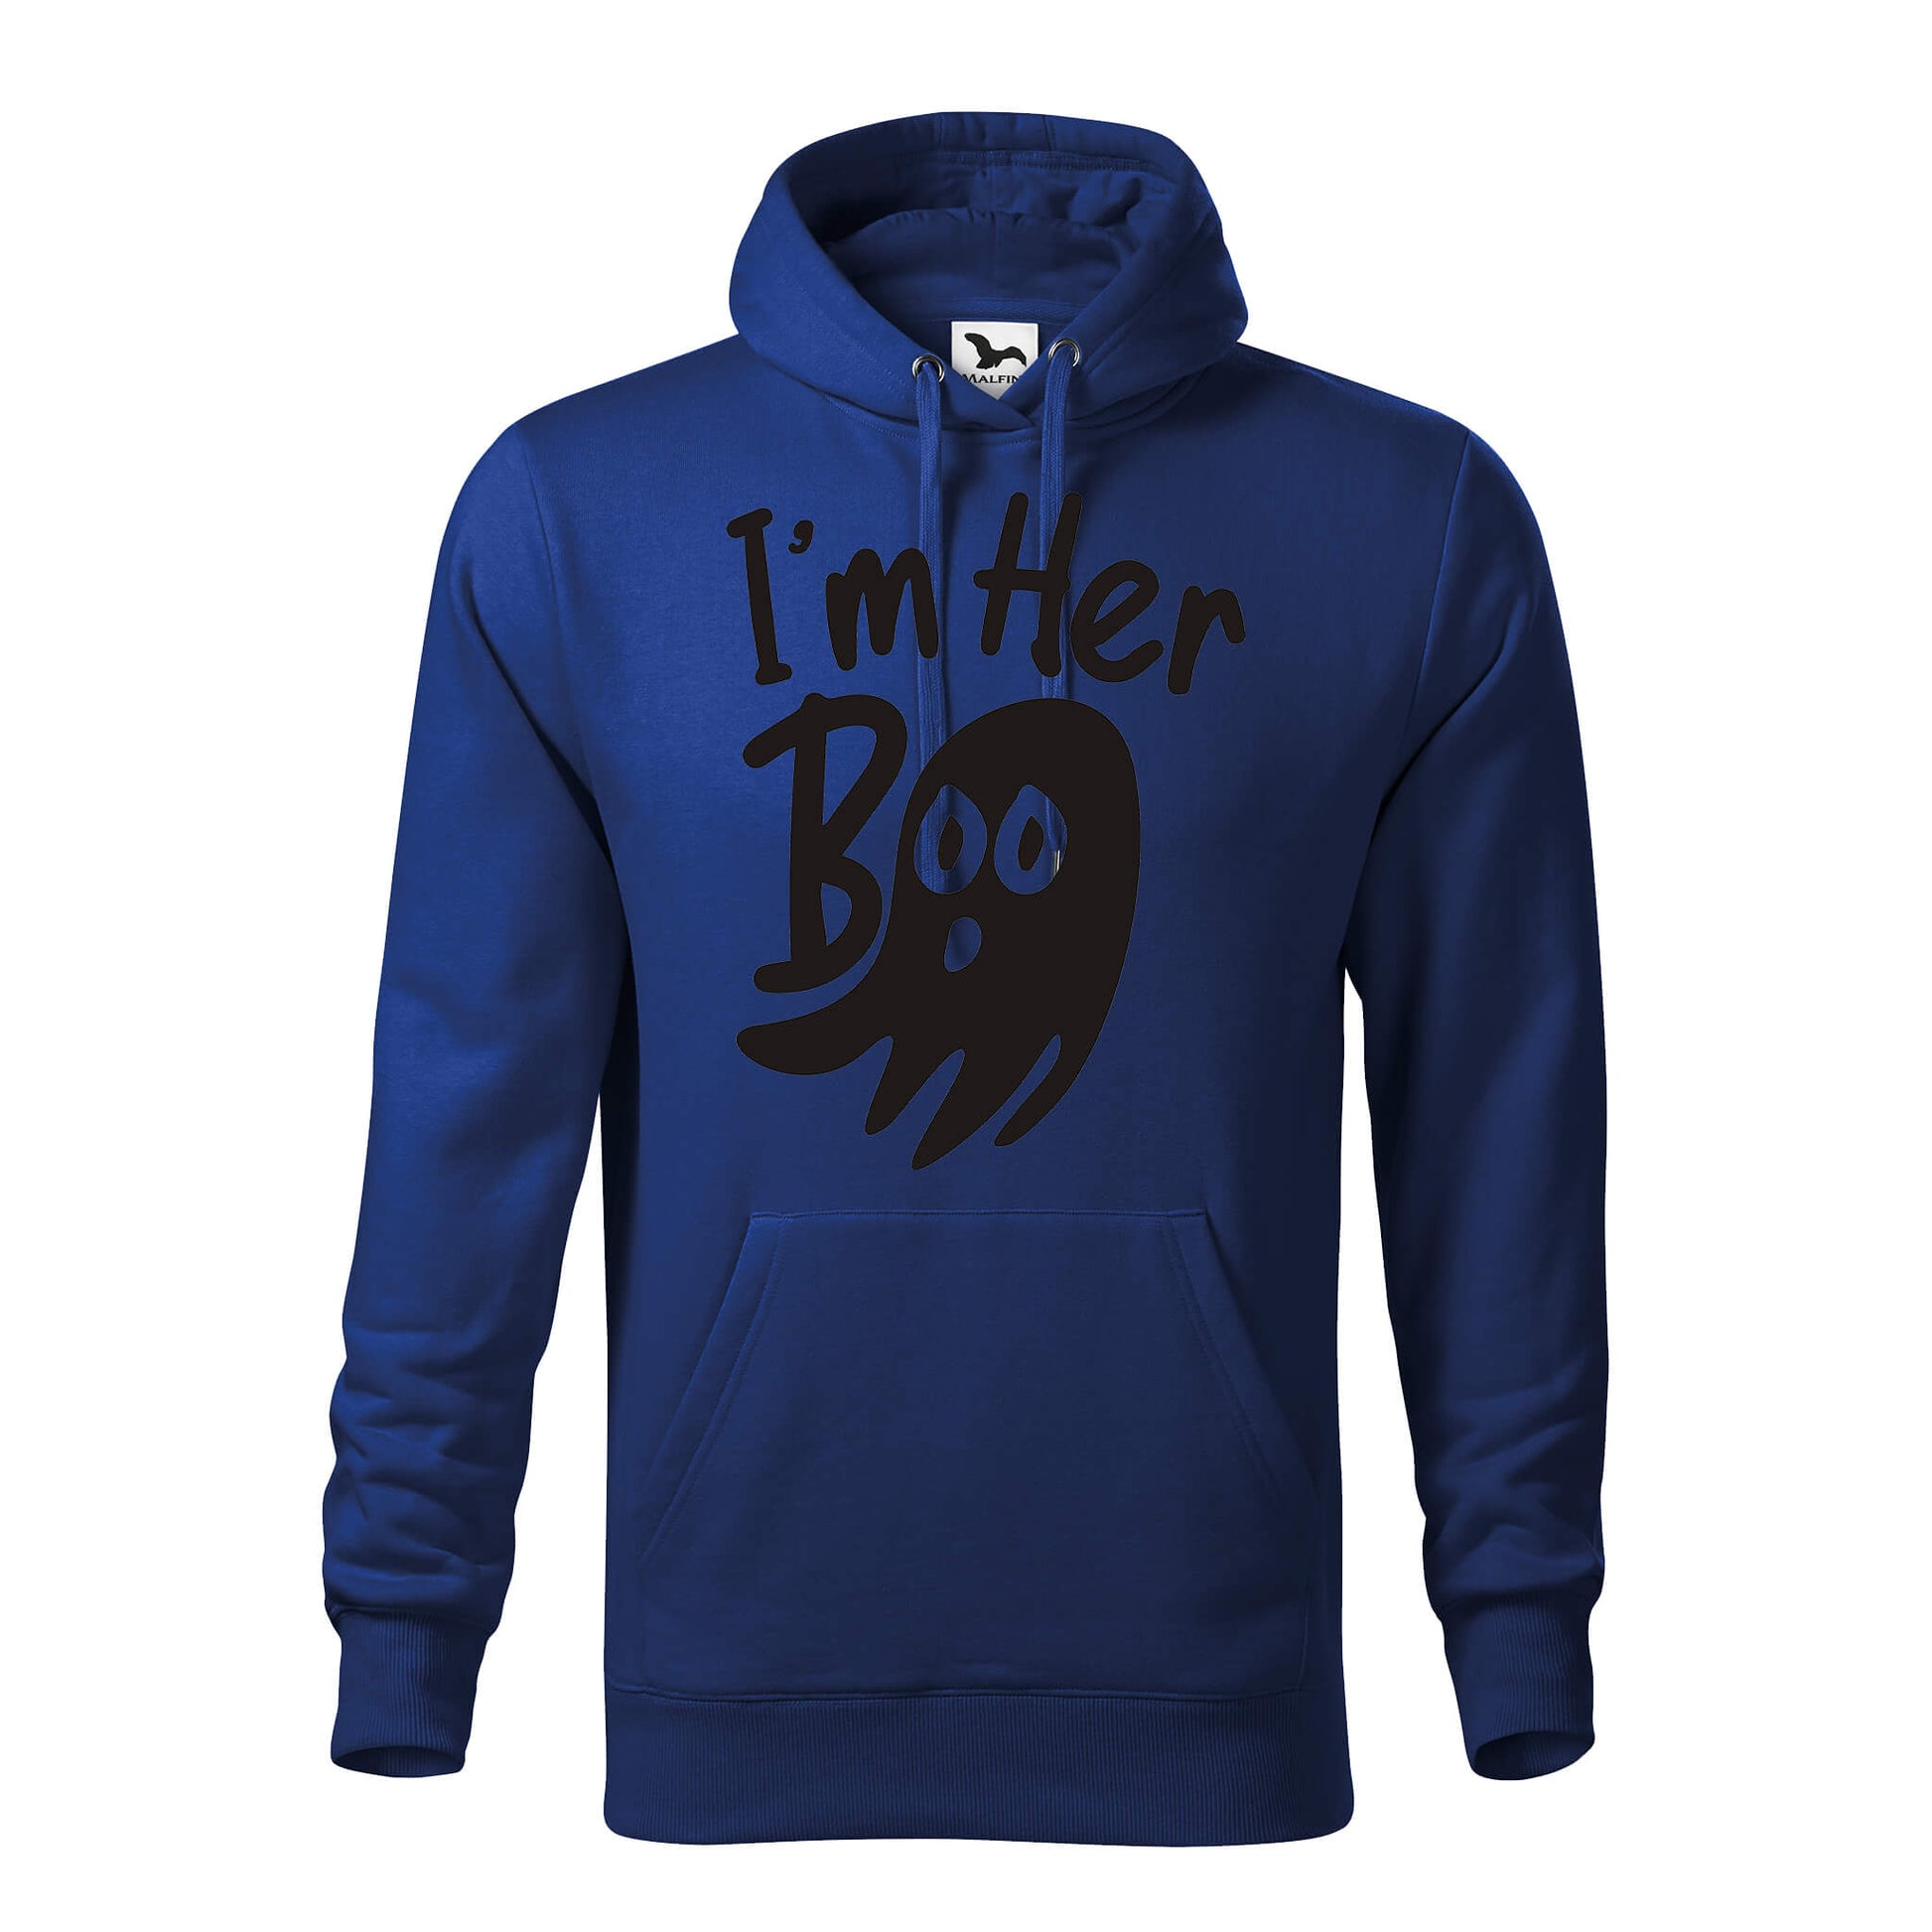 Im her boo 2 hoodie - rvdesignprint